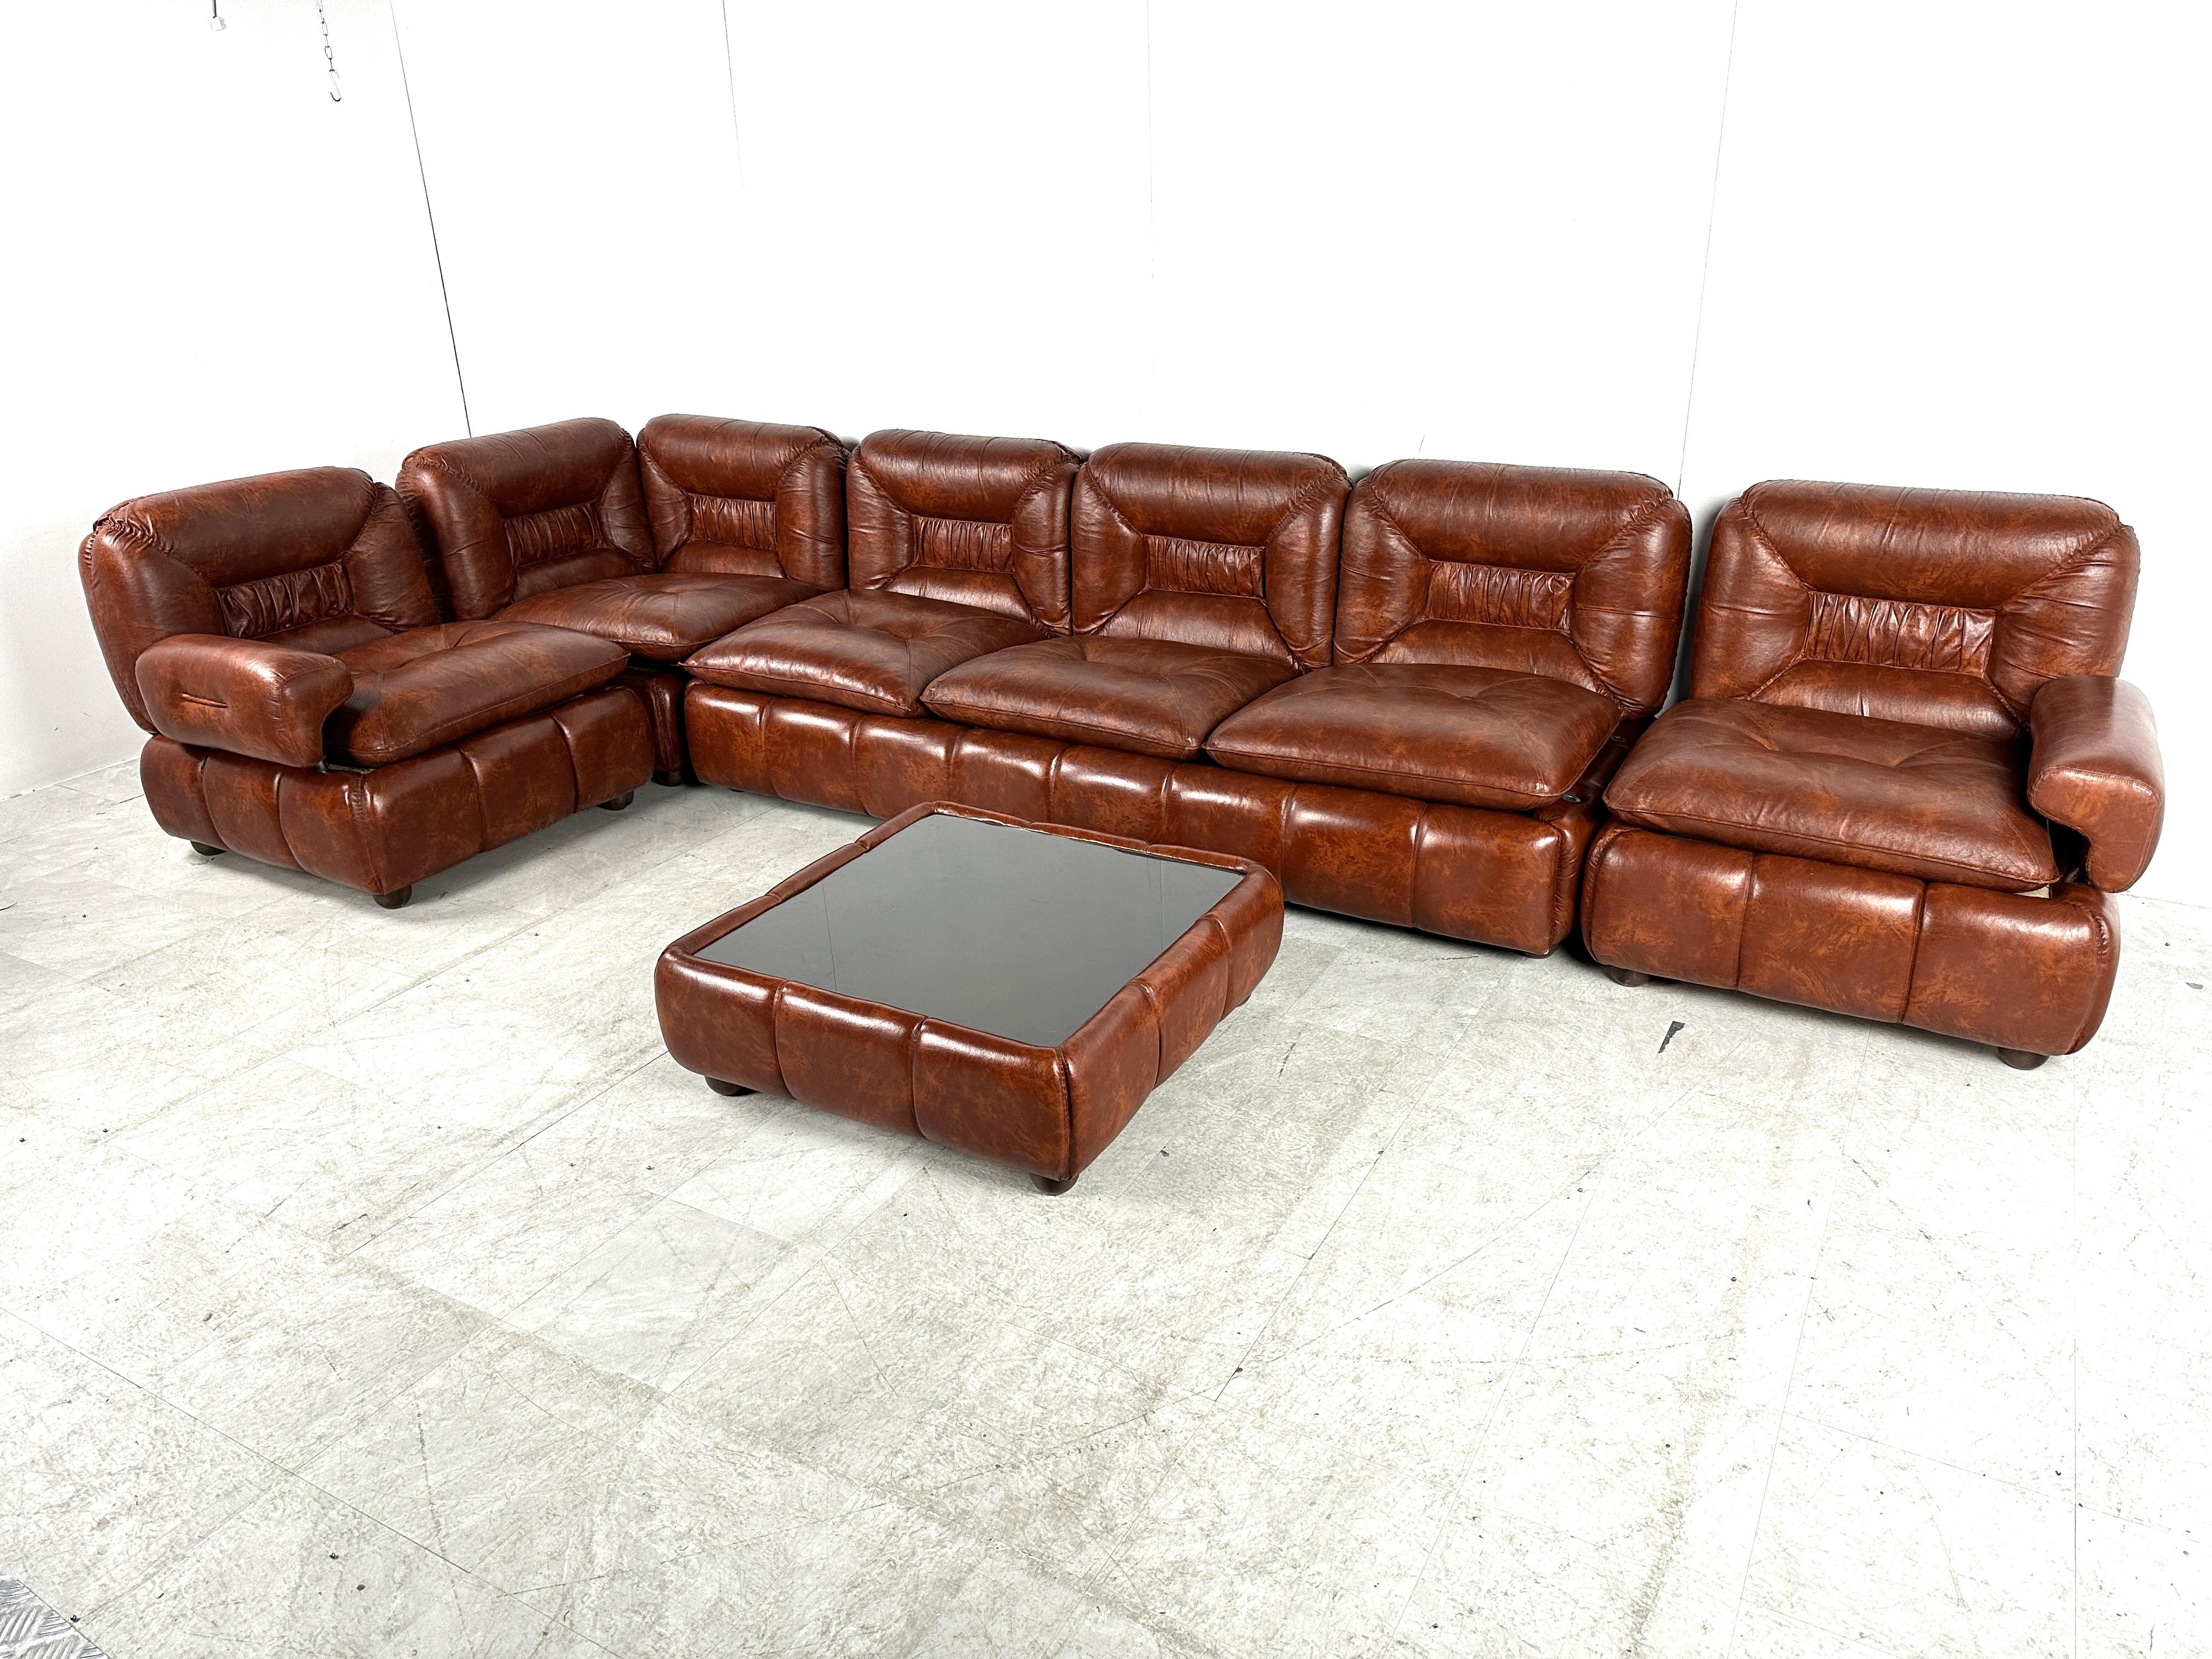 1970s modular sofa